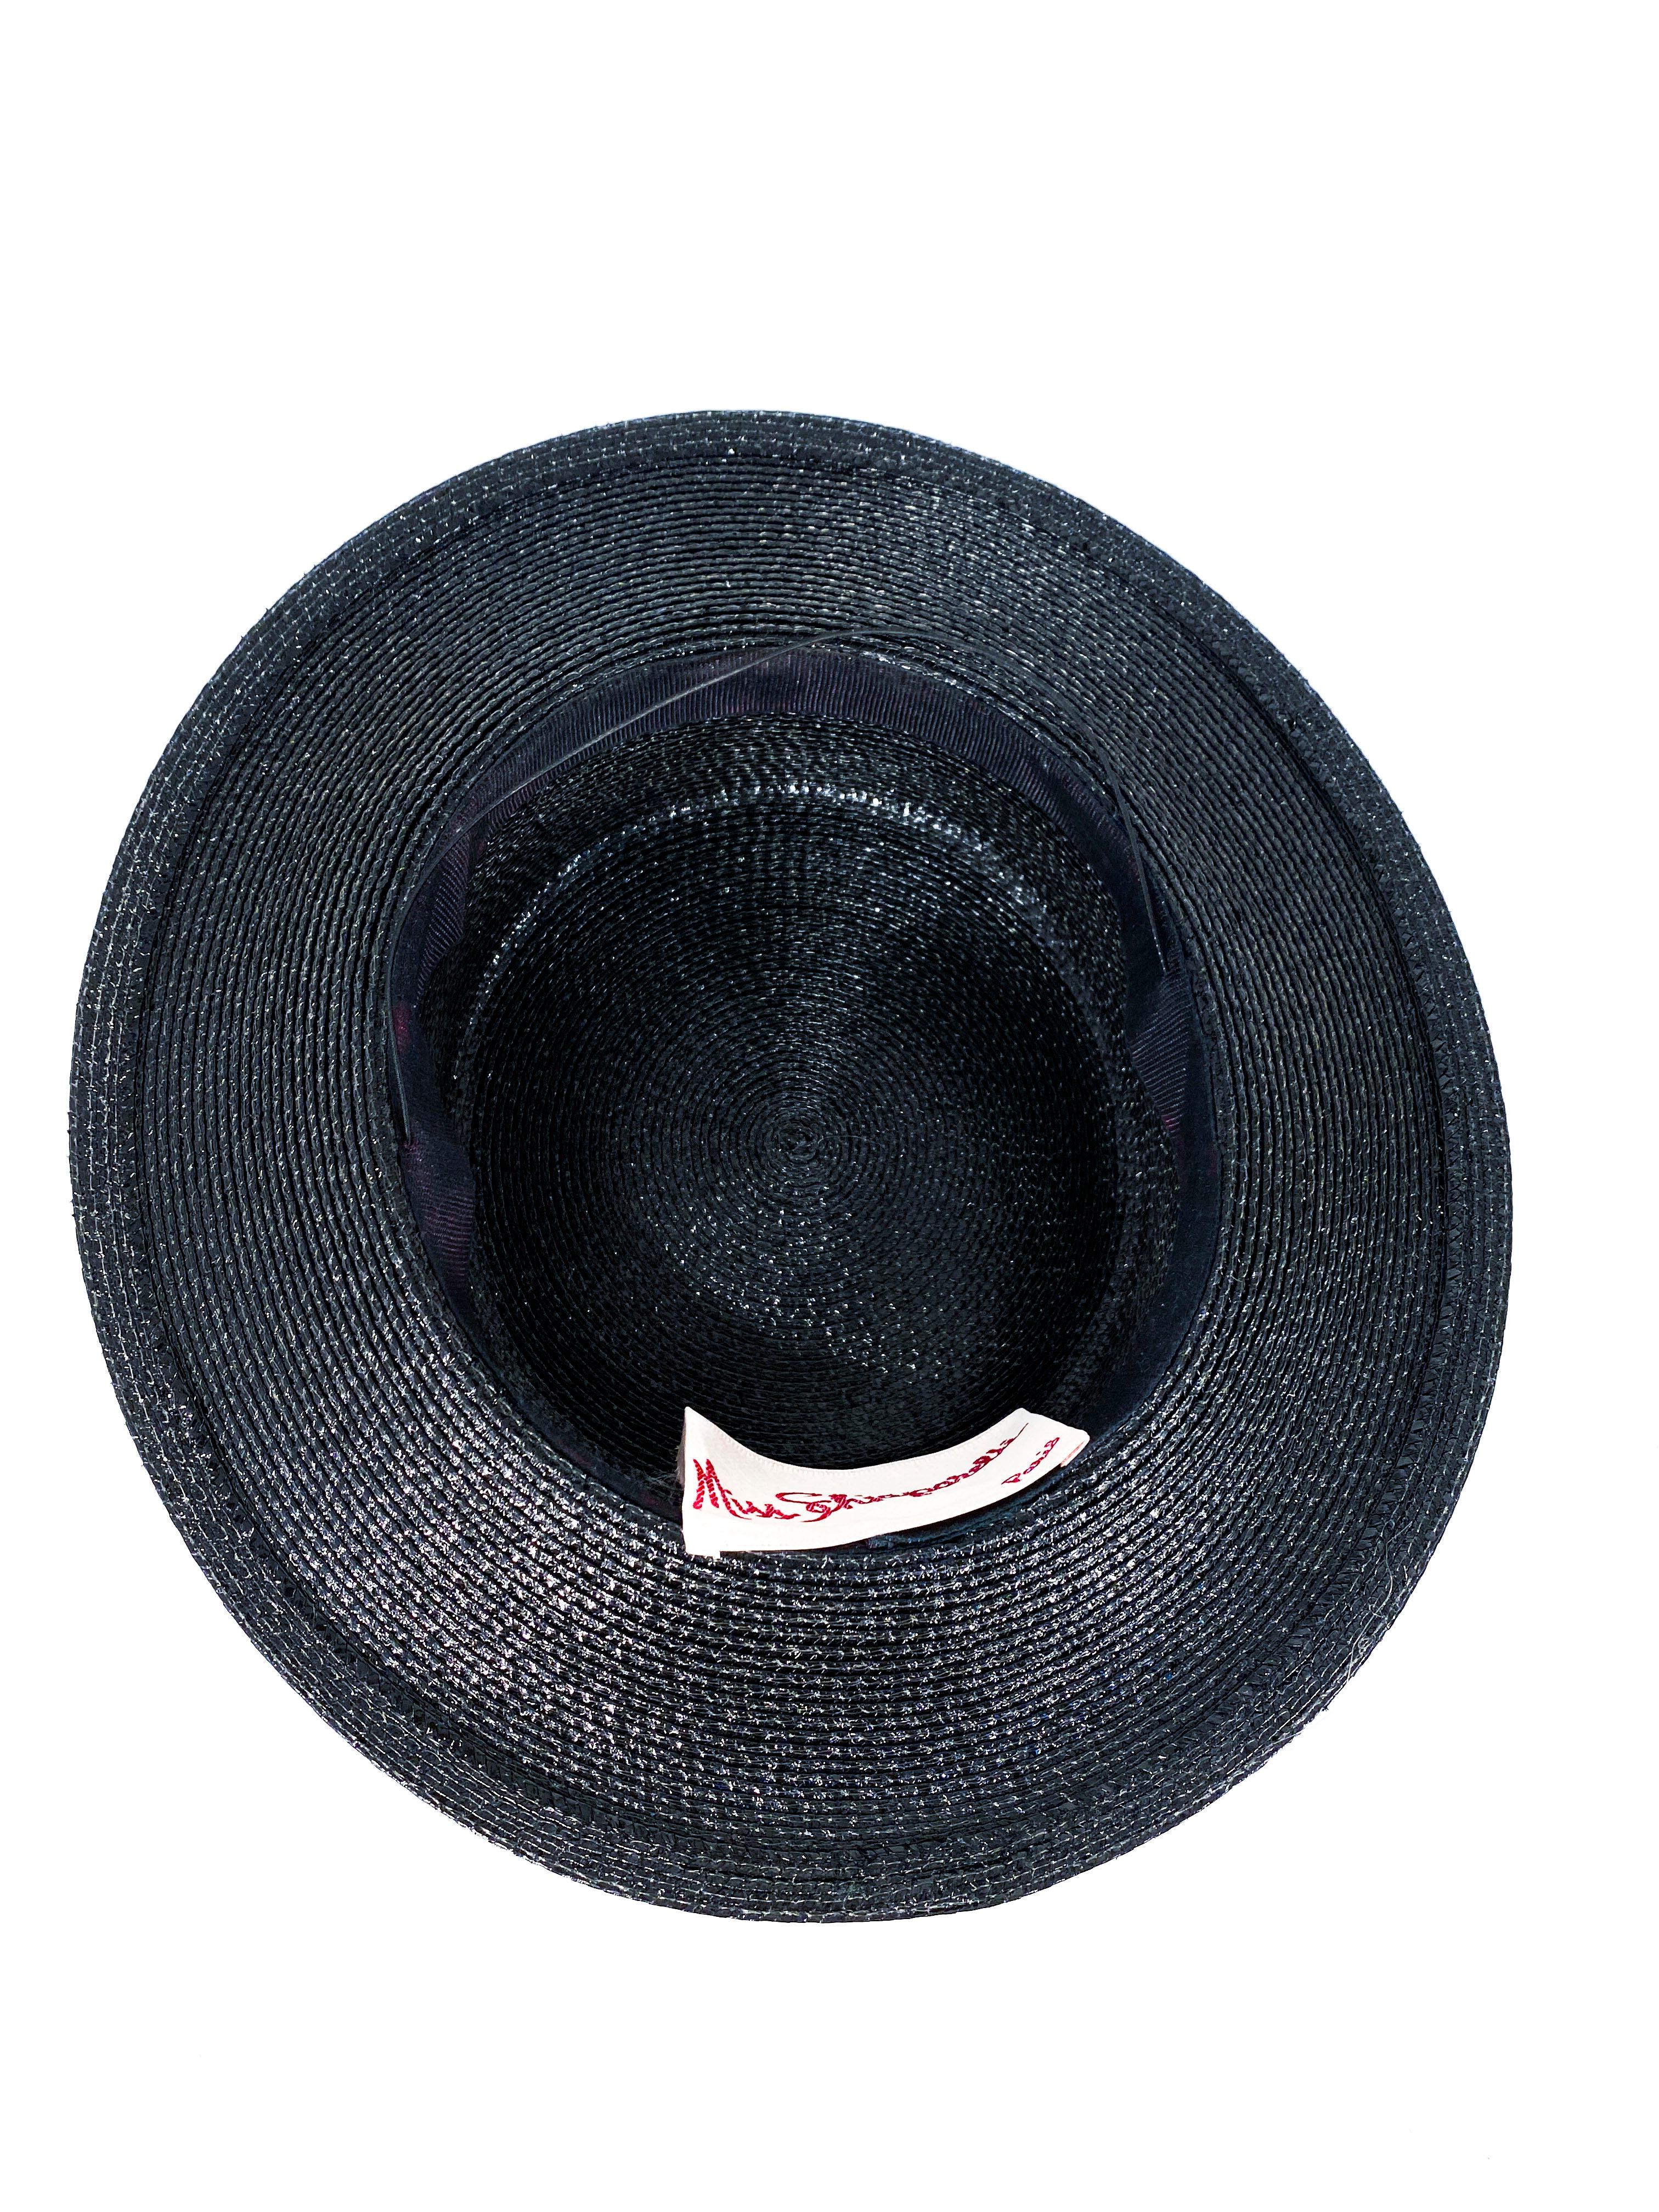 1960s Schiaparelli Black Coated Straw Hat 3